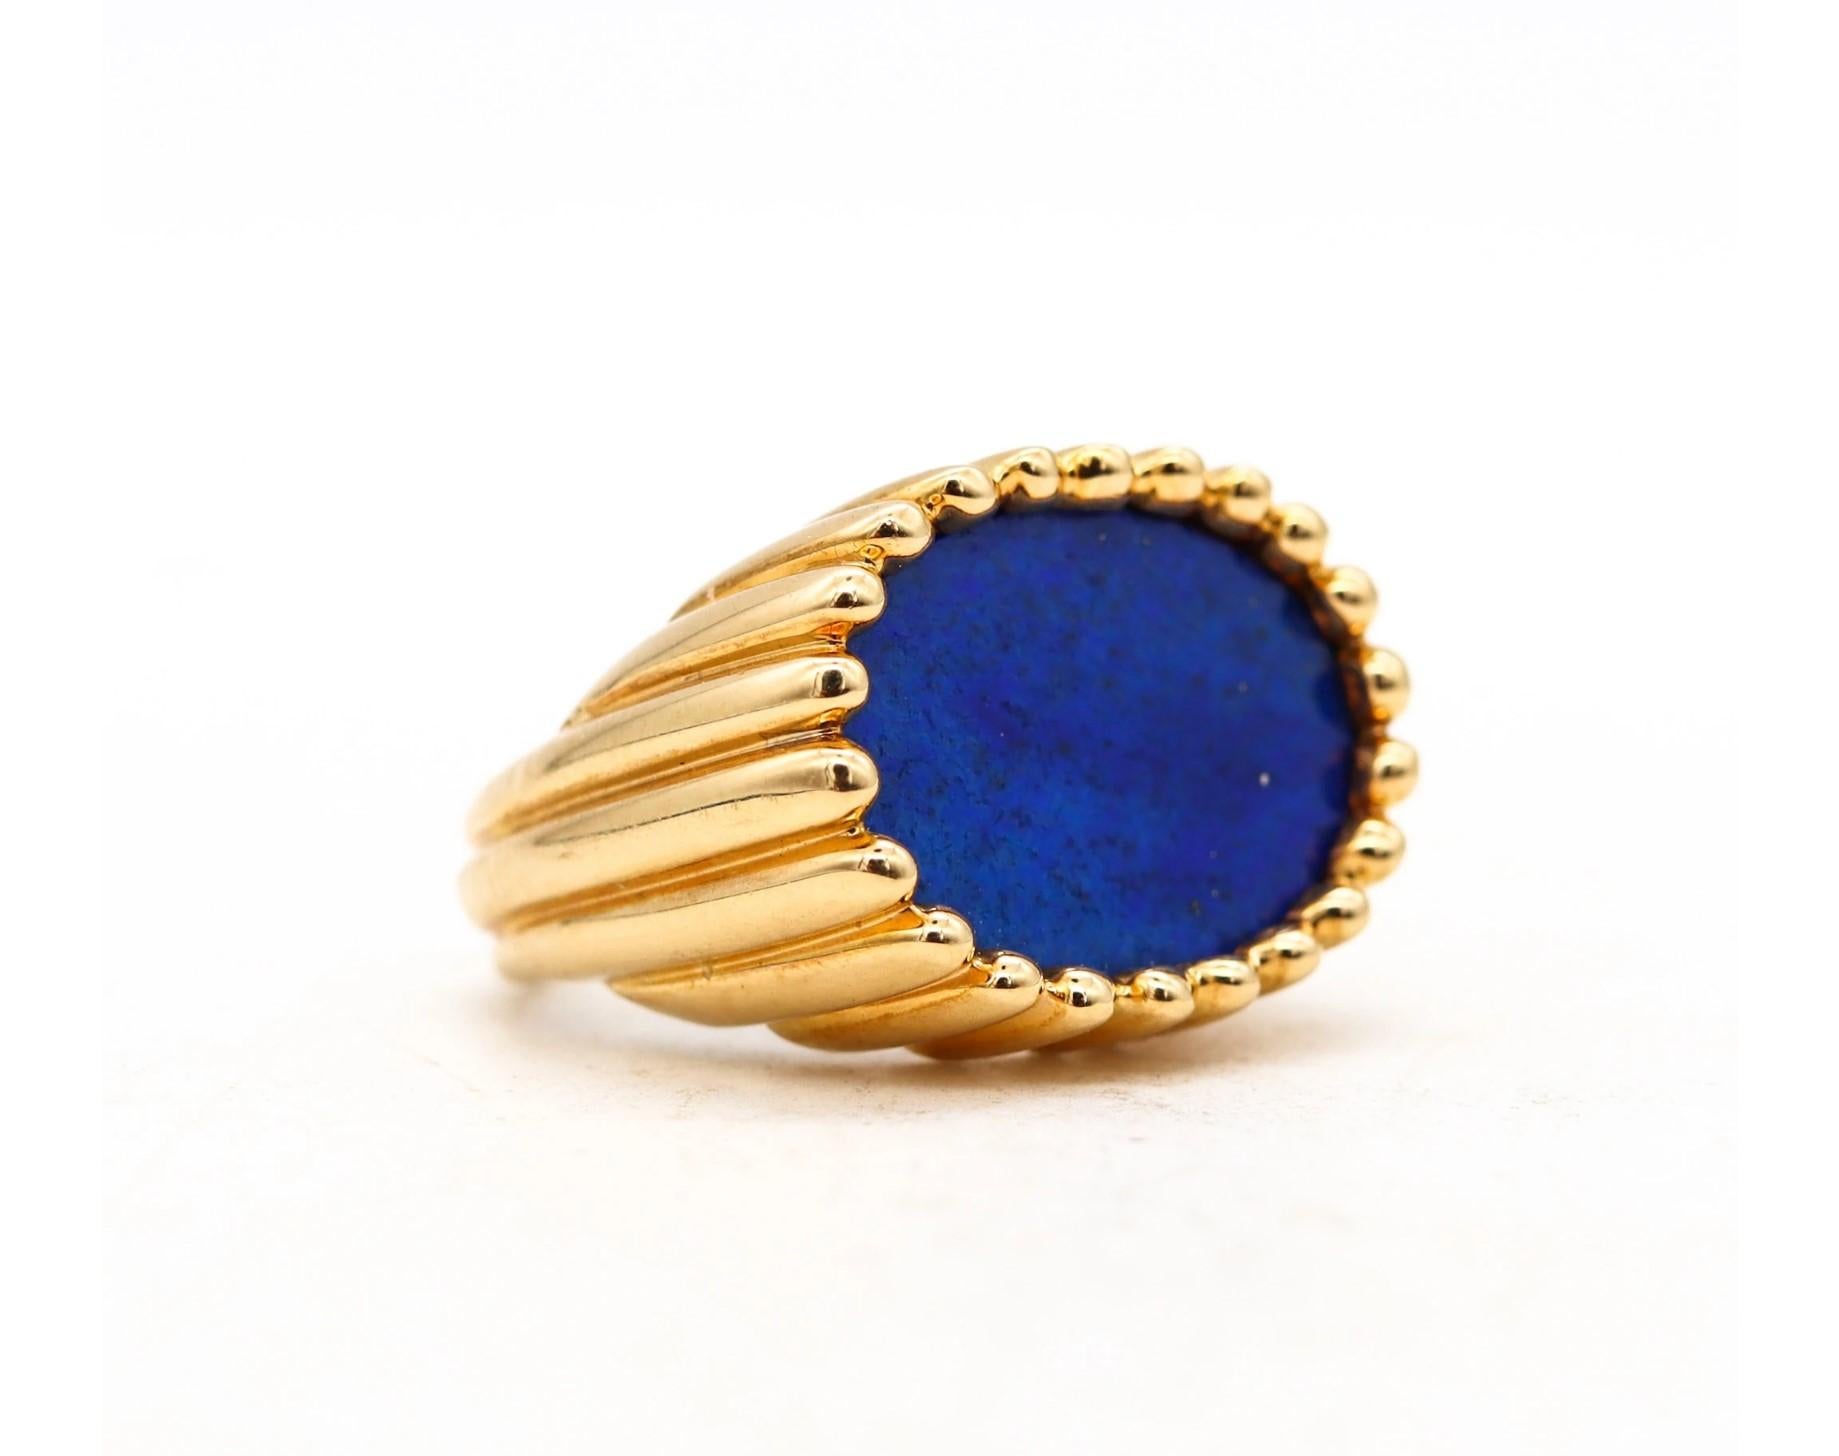 Modernist Italian Tartelette Signet Fluted Ring 18Kt Gold 7.74 Cts in Blue Lapis Lazuli